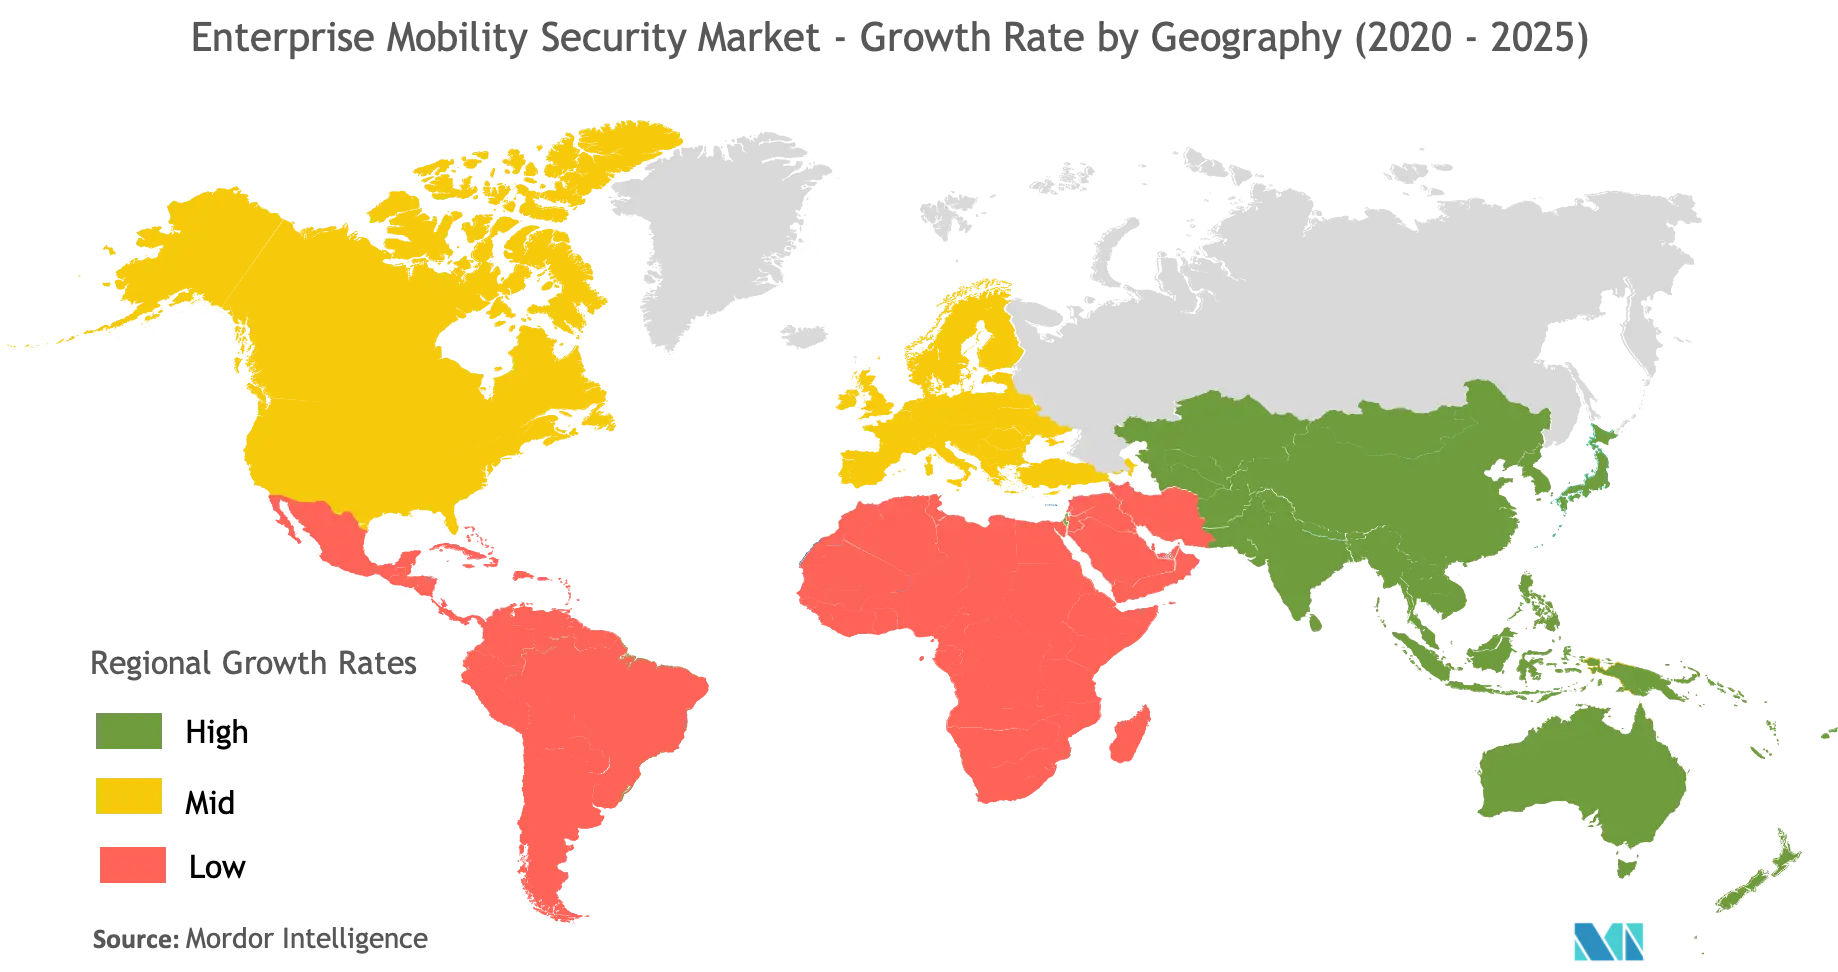  byod security market share